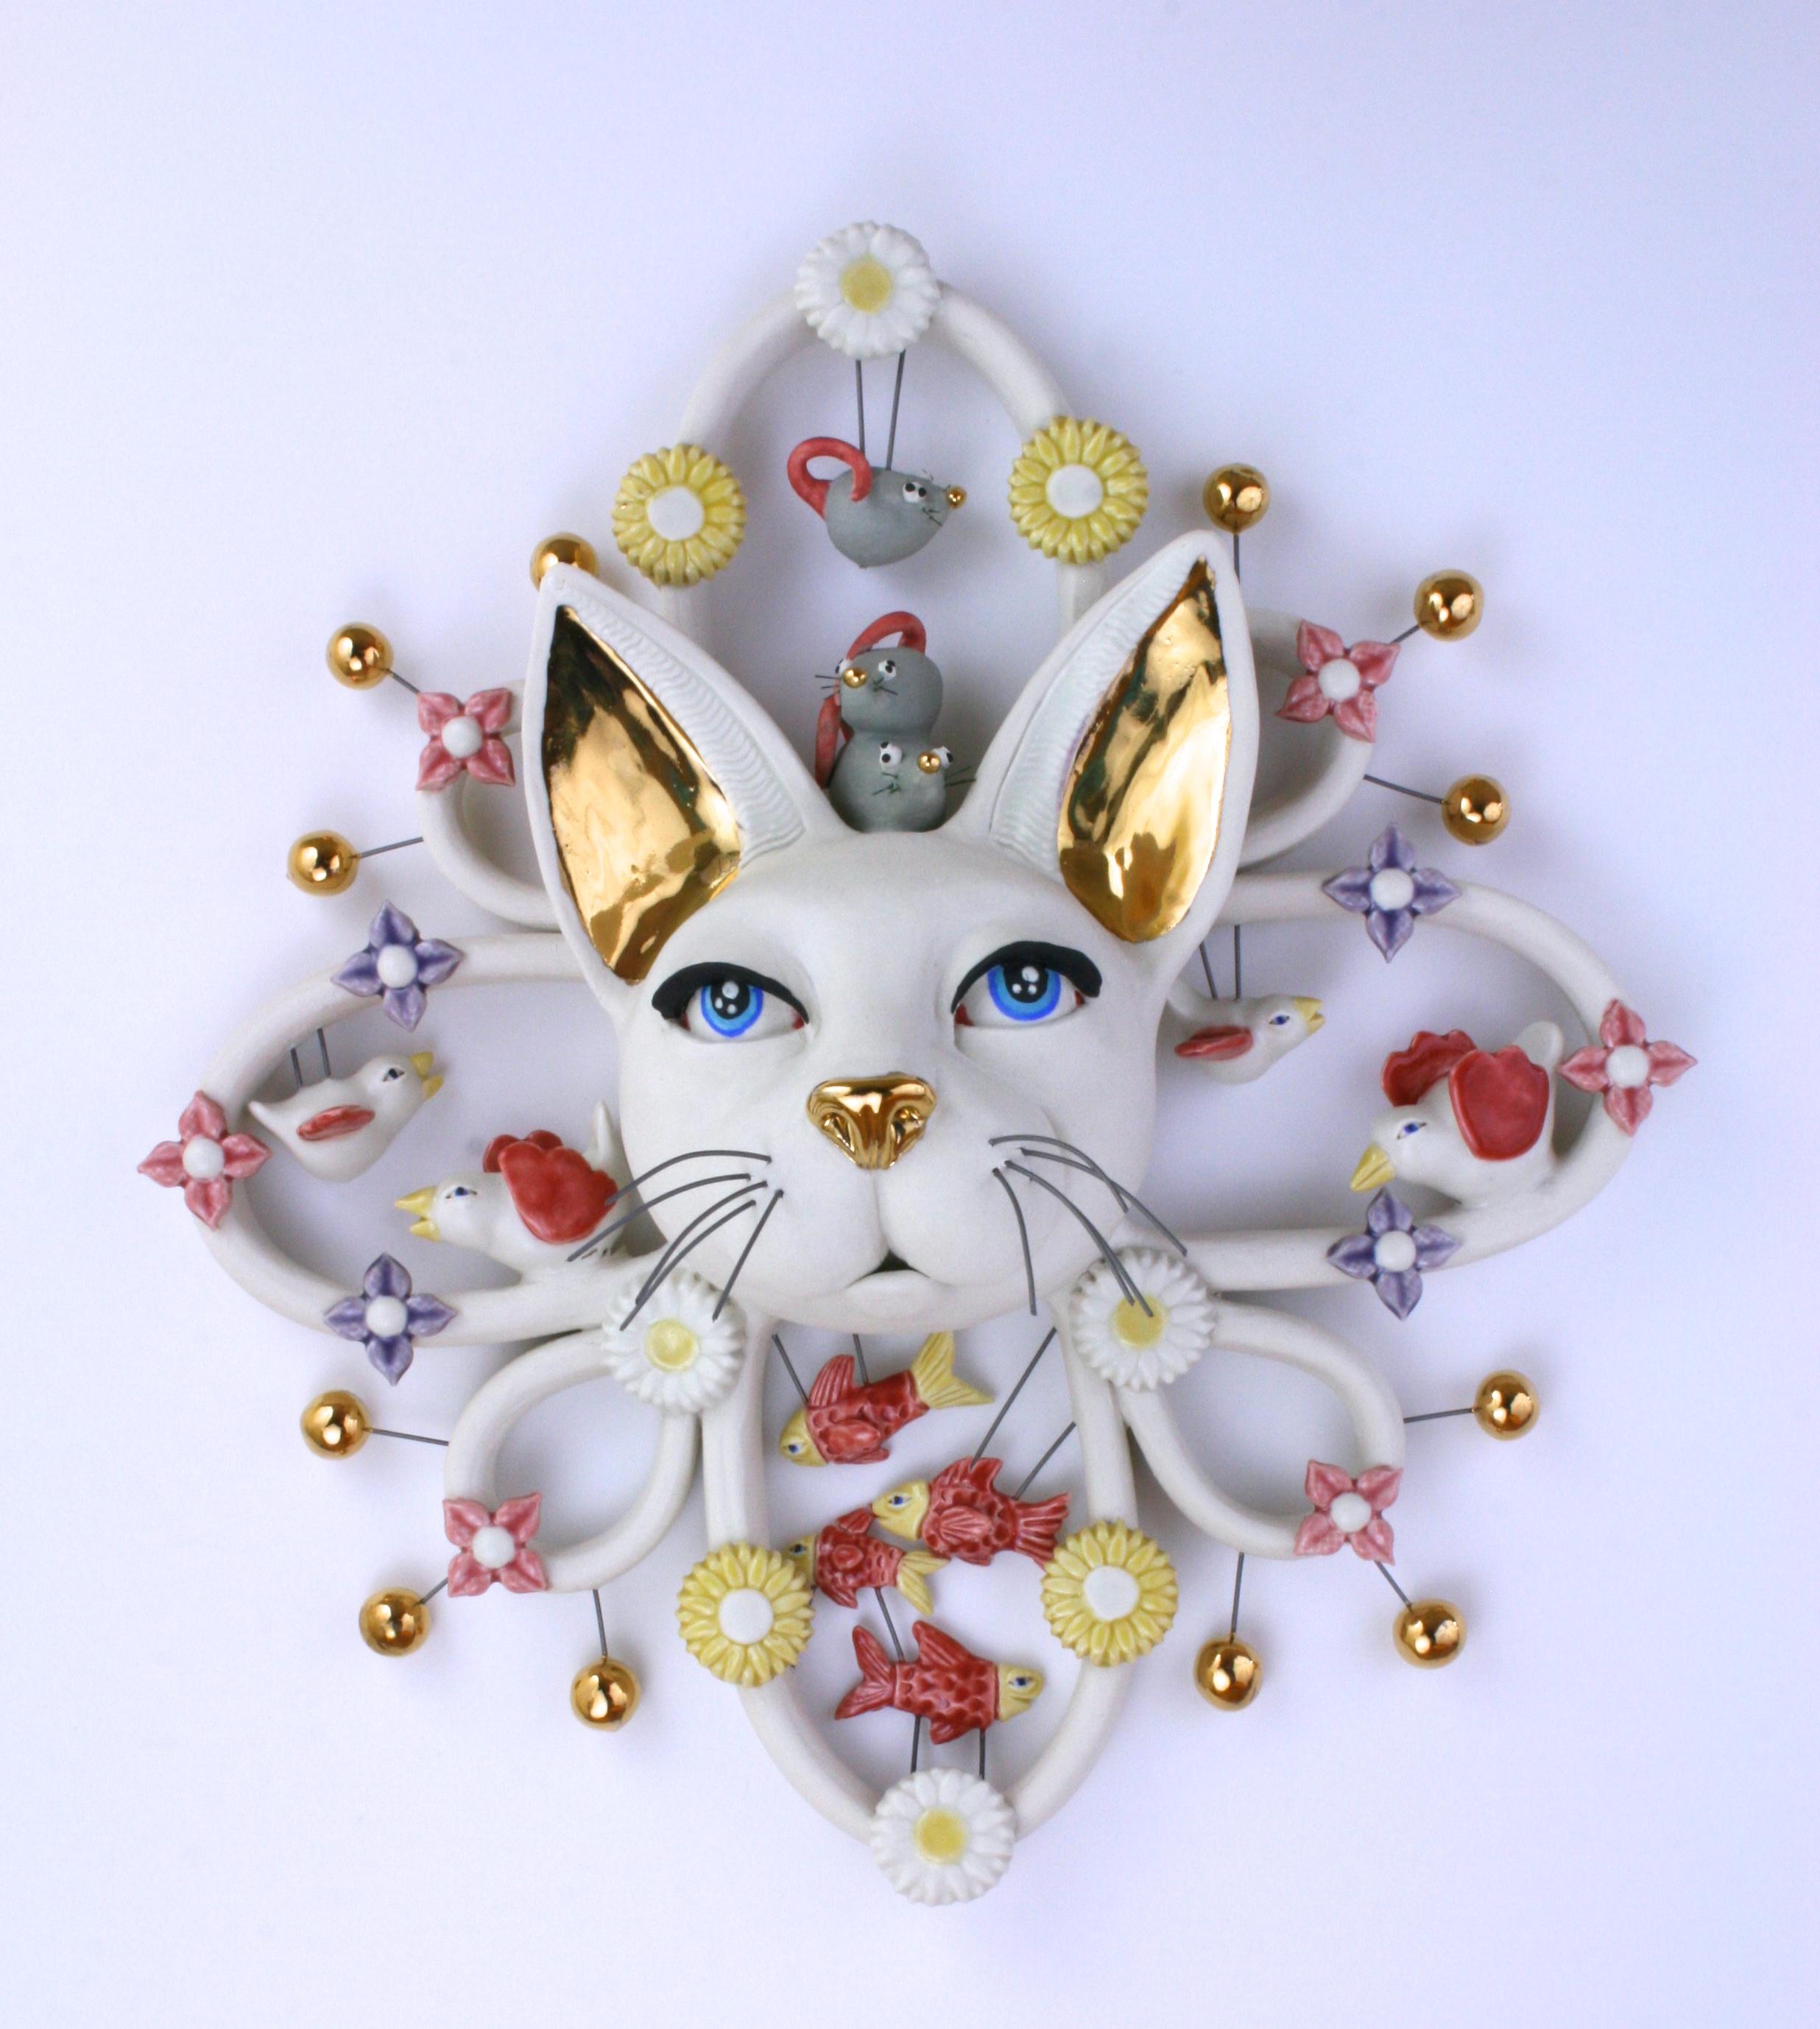 Taylor Robenalt Figurative Sculpture - CAT ATTACK - porcelain ceramic sculpture with cat, birds, mice, fish and flowers